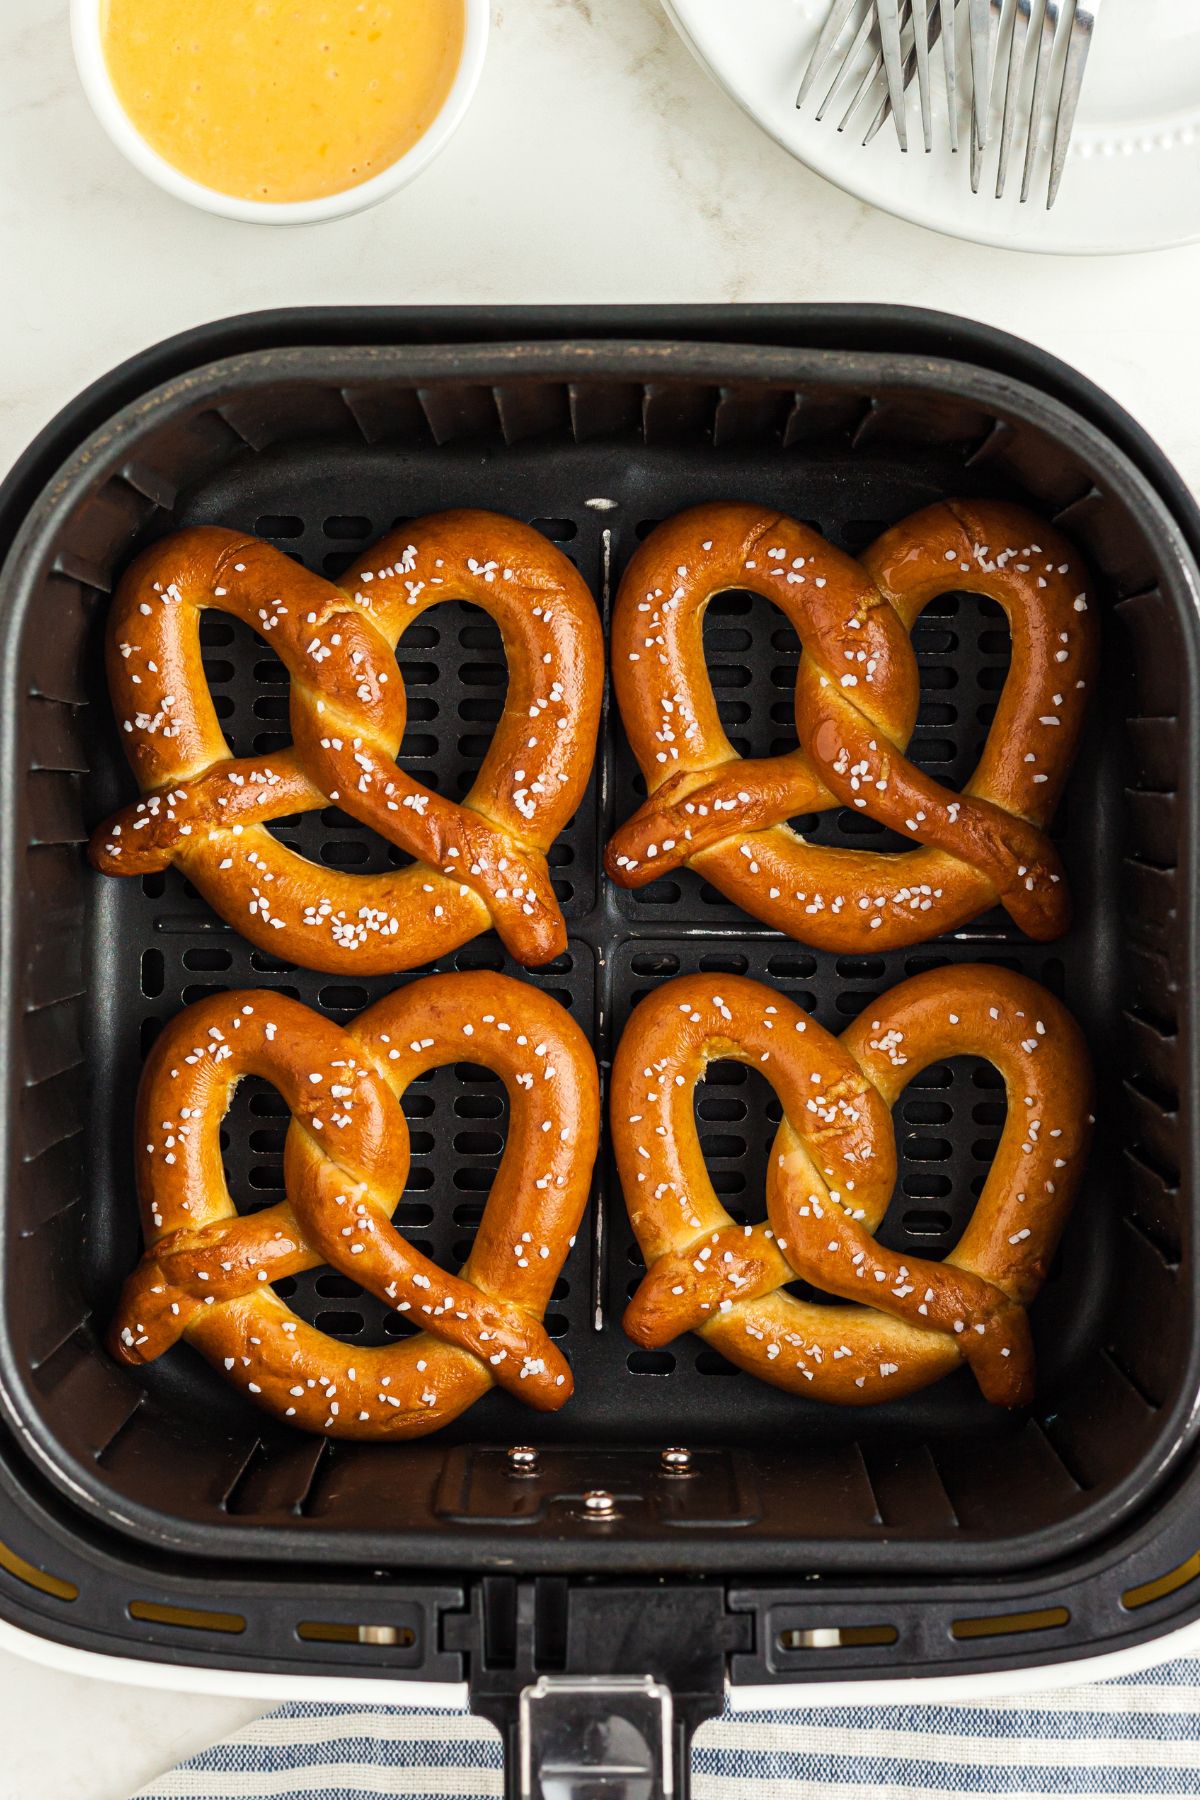 Frozen pretzels in the air fryer basket before being reheated